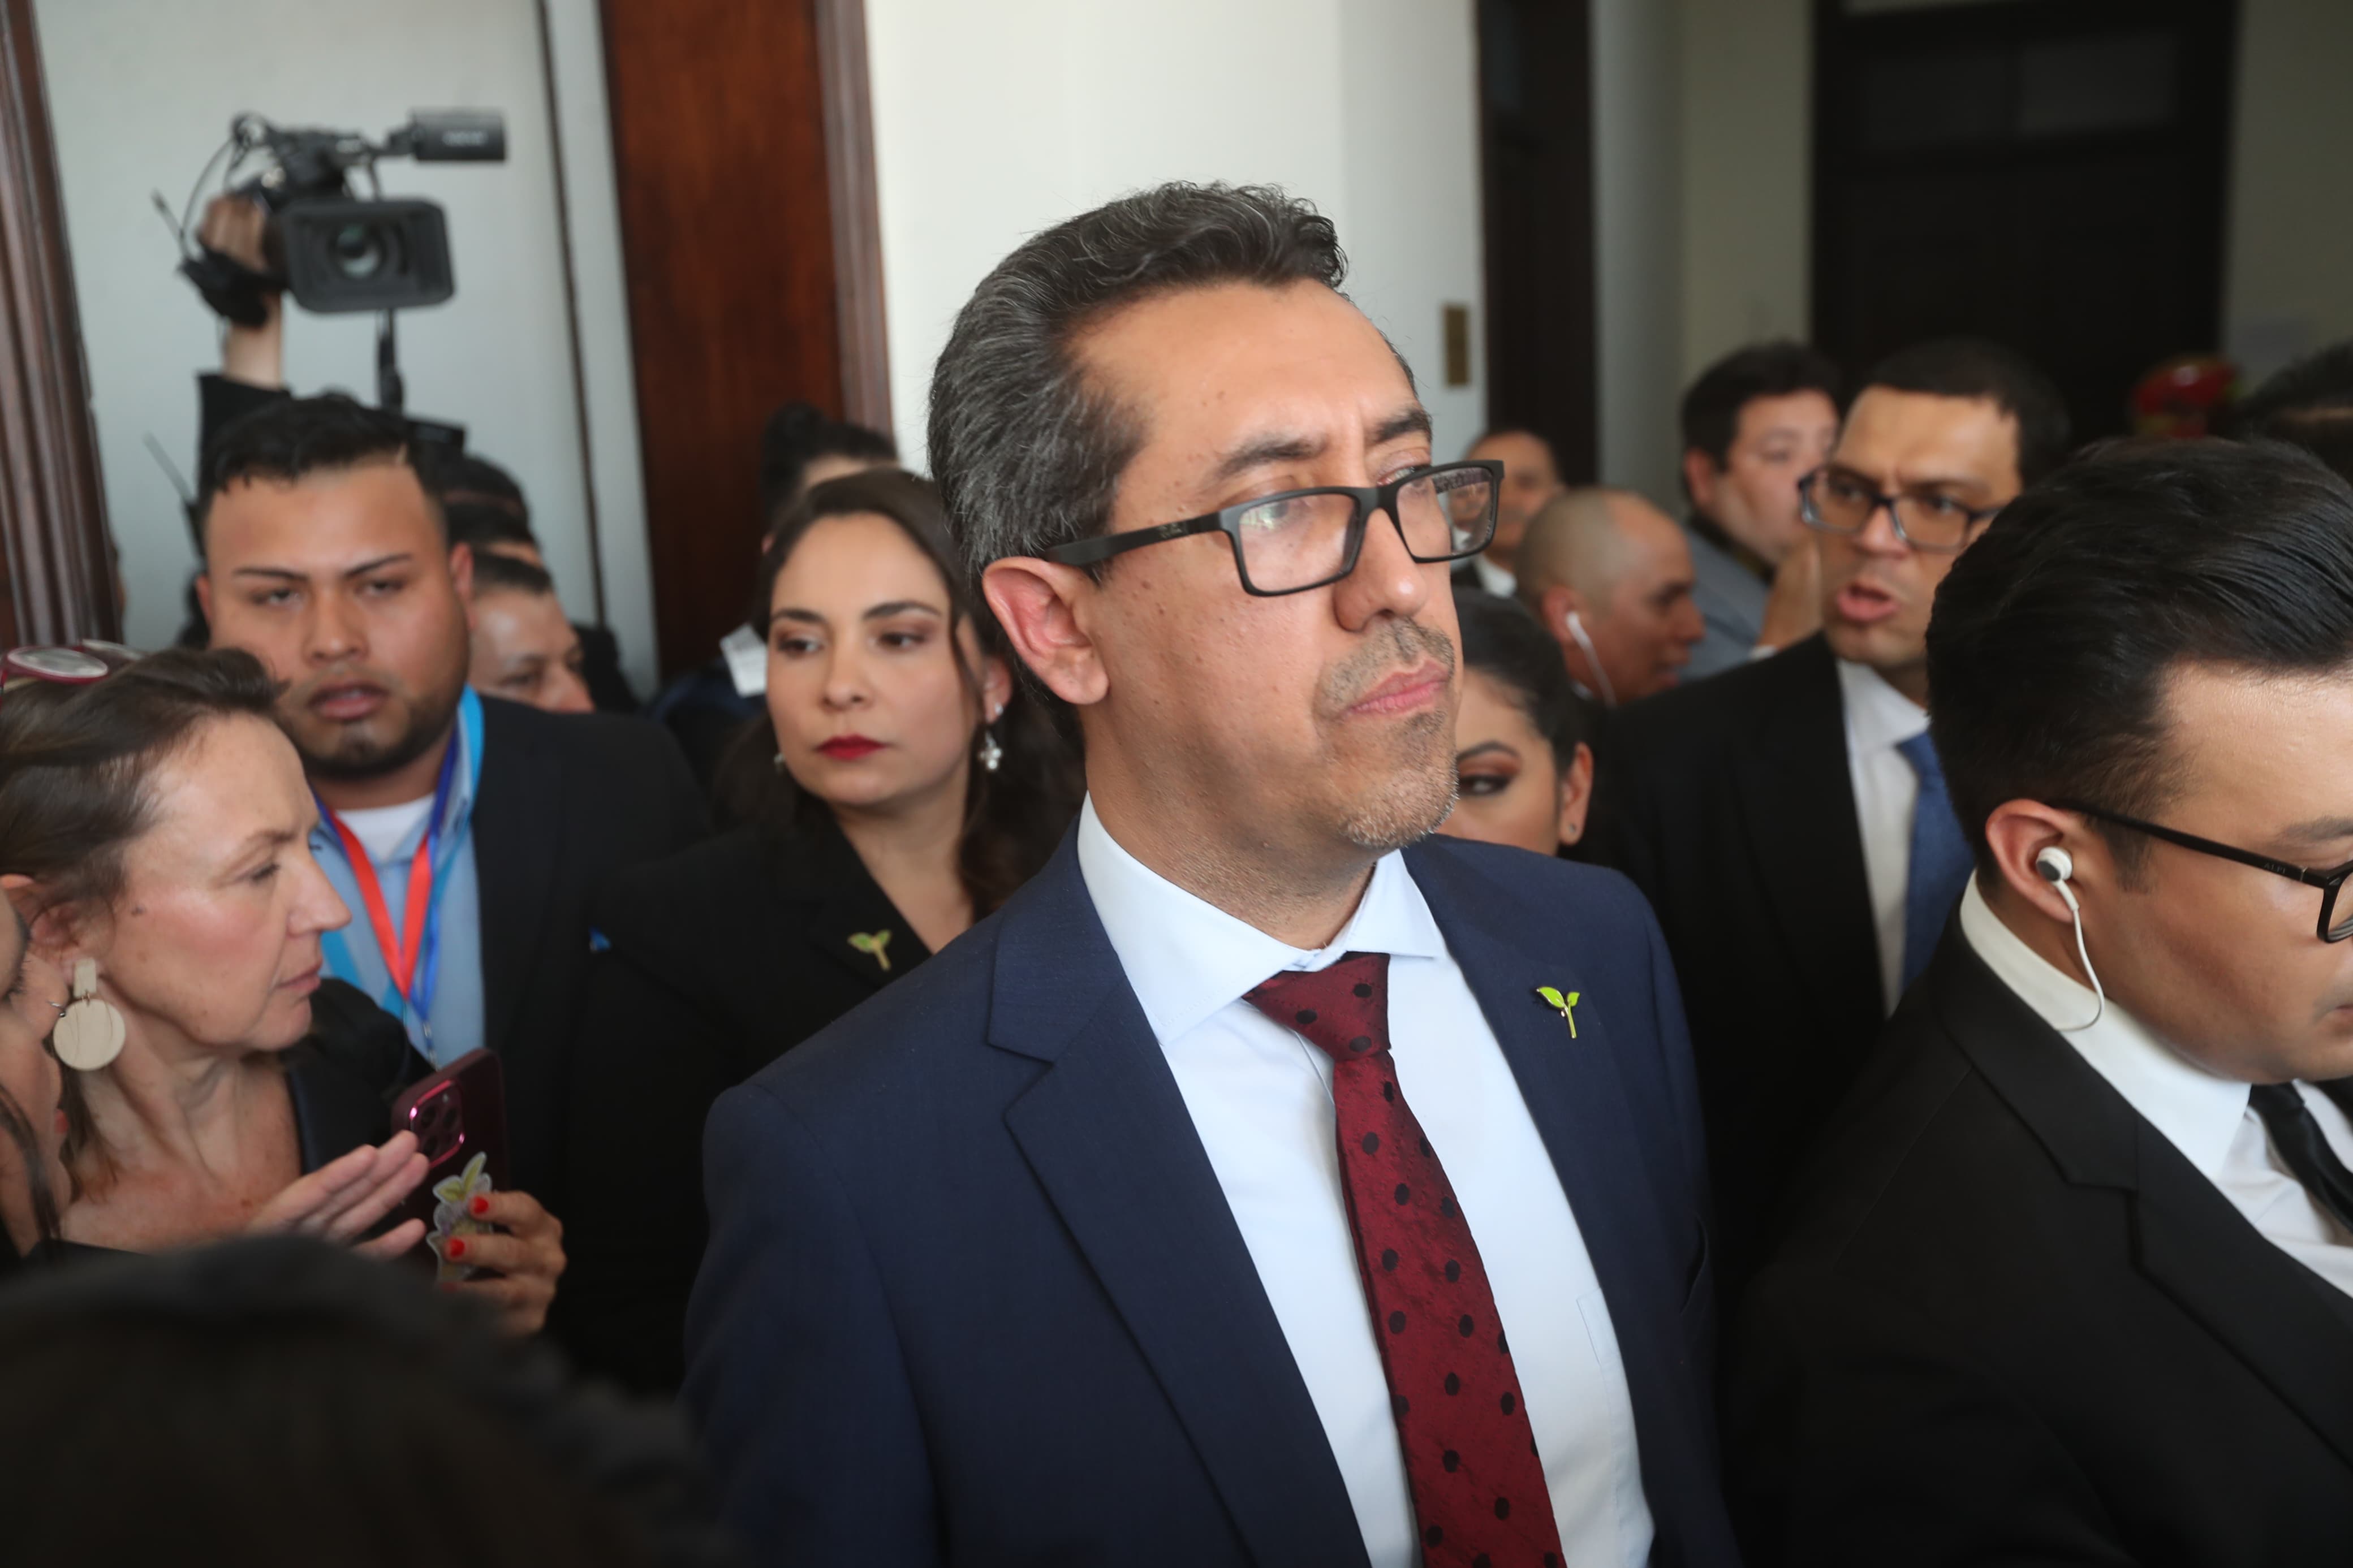 Momentos de tensión en Guatemala: disputa en el Congreso causa retrasos previo a la toma de posesión de Bernardo Arévalo como presidente'